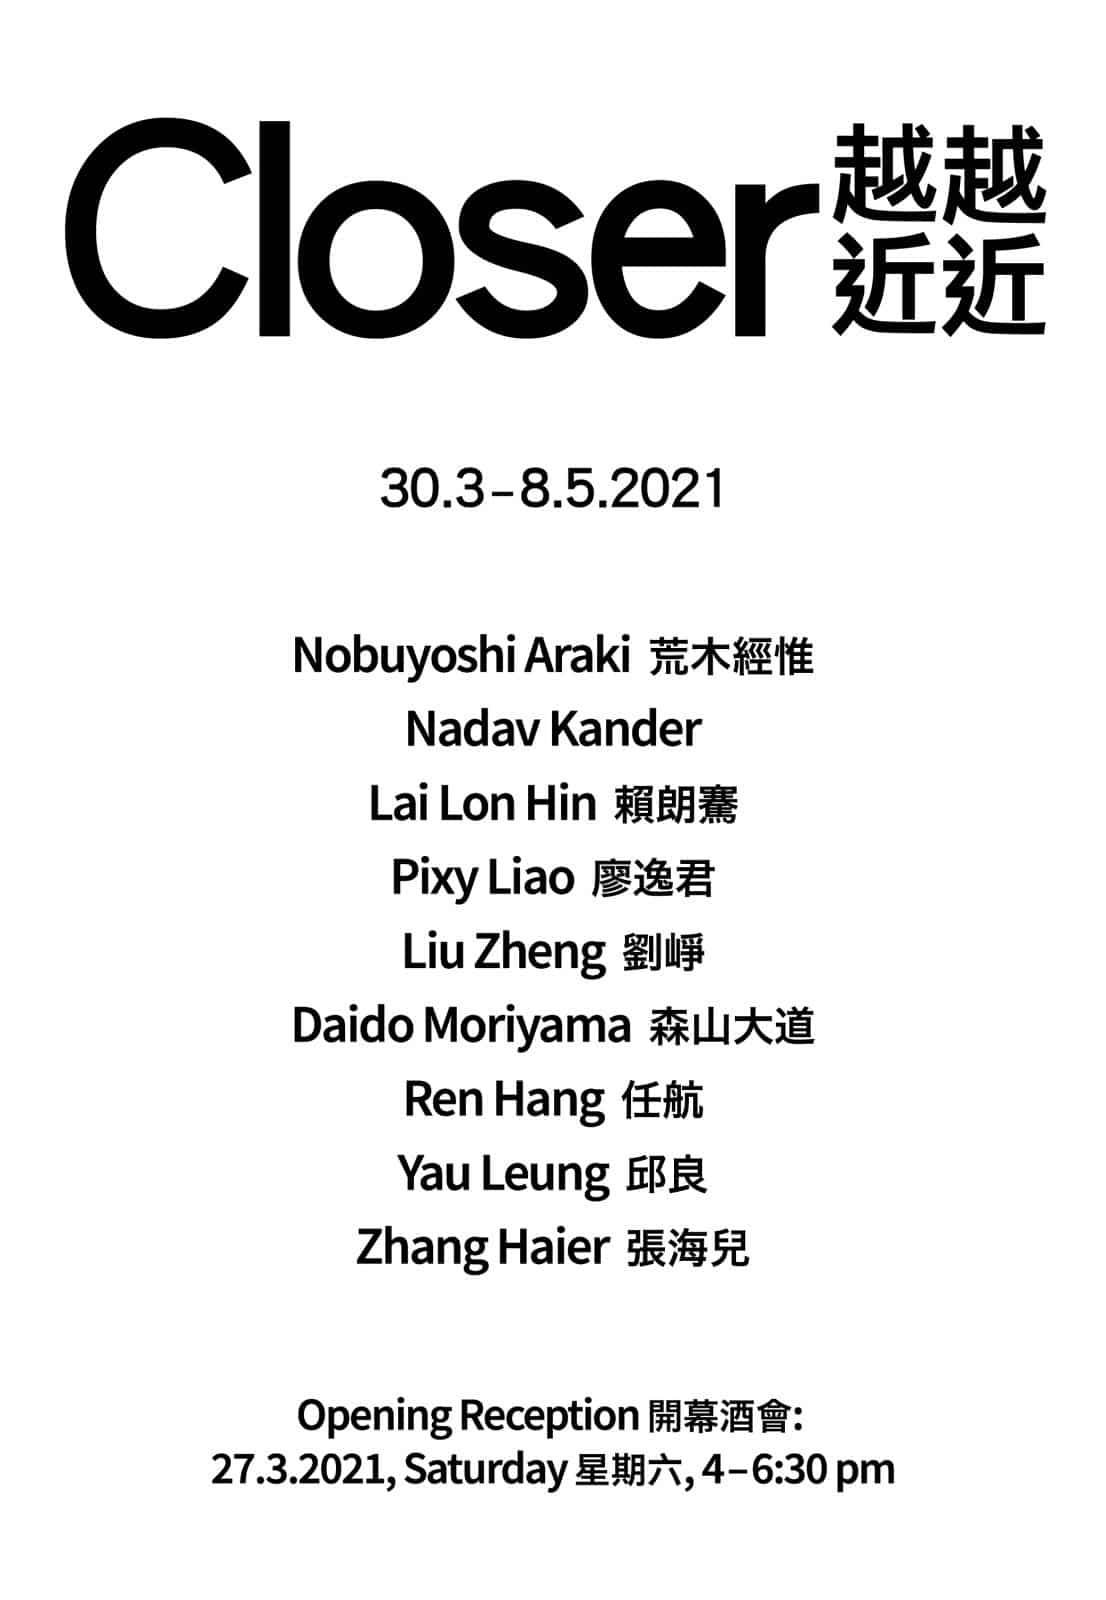 Blindspot Gallery. Opening (27 Mar, Sat) | "Closer": Portrait Photography